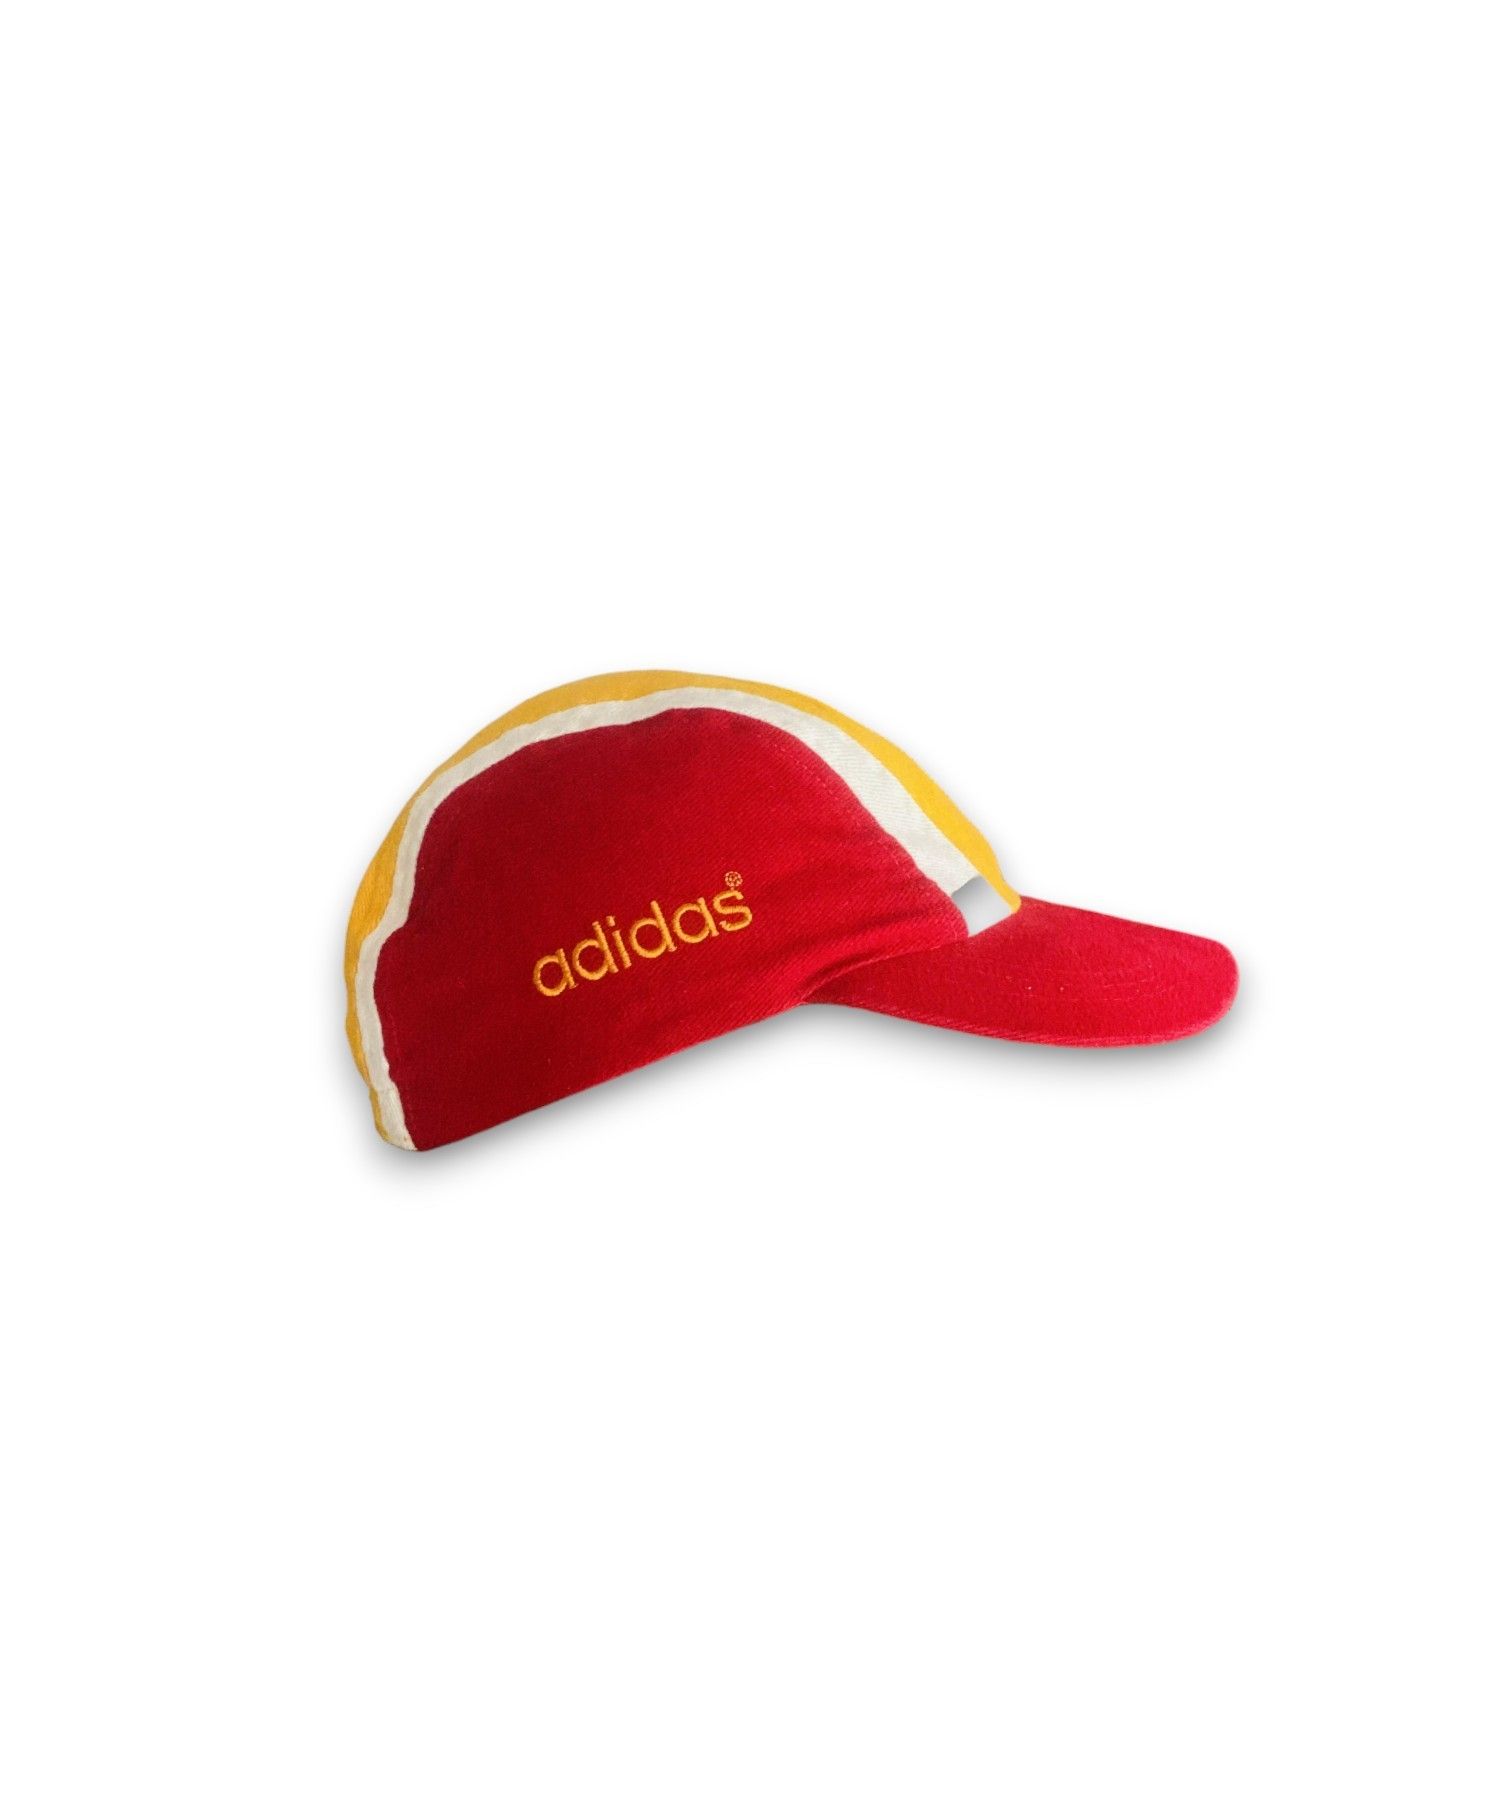 Adidas Vintage Cap Hat 3 Red Yellow - 1